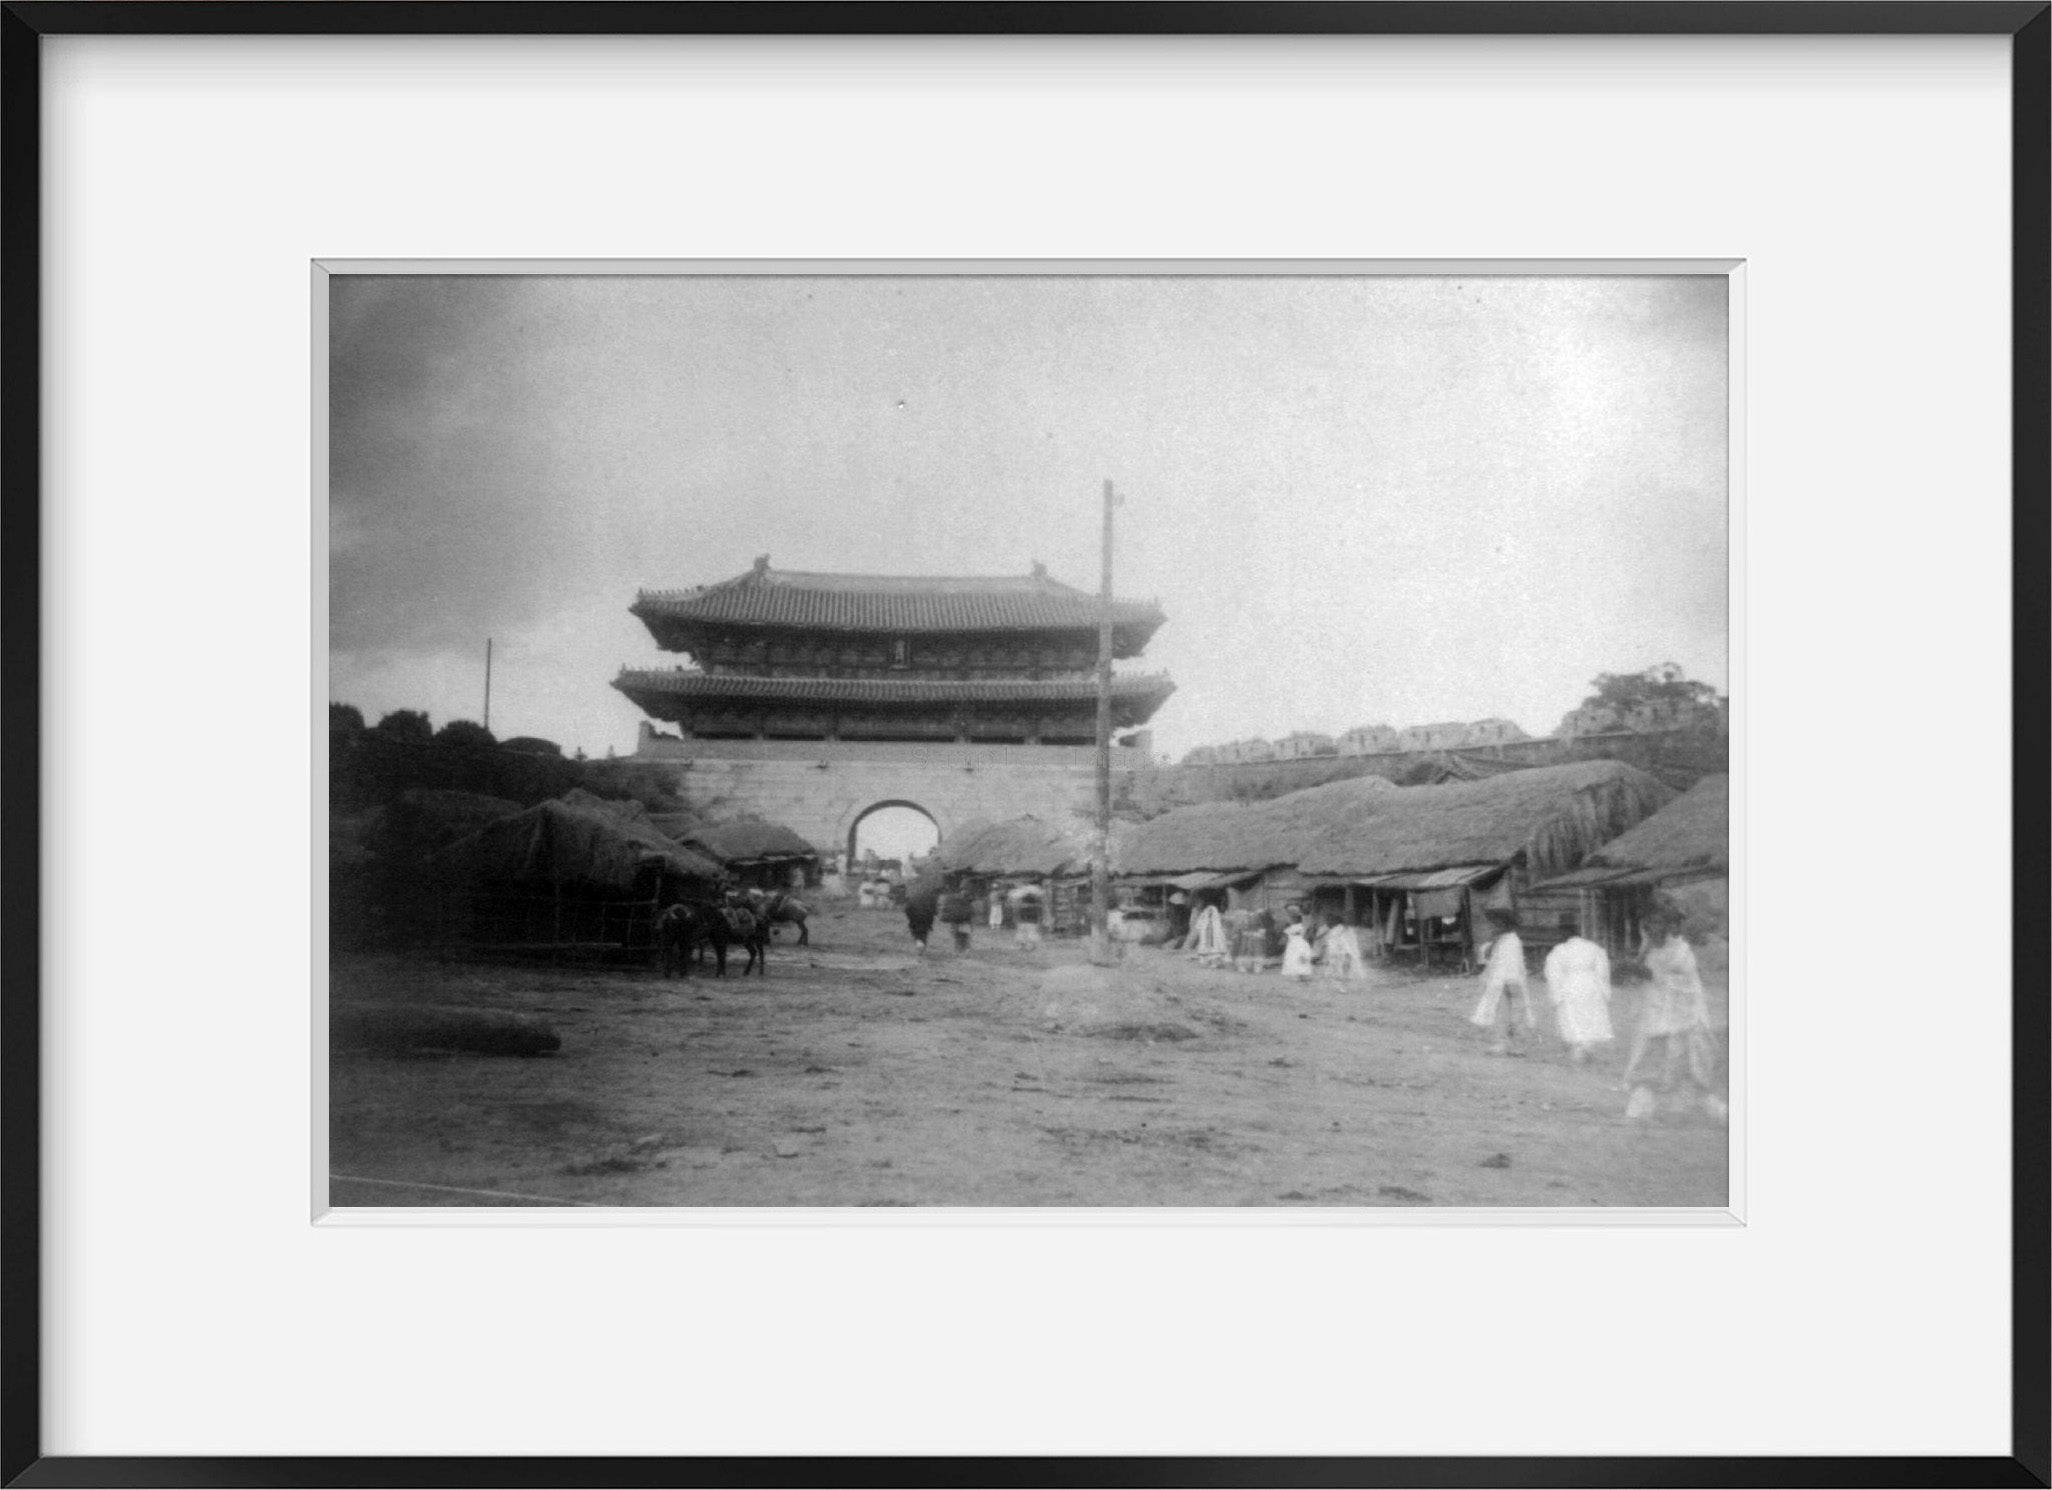 1896 photograph of South gate, Seoul, Korea, 1896